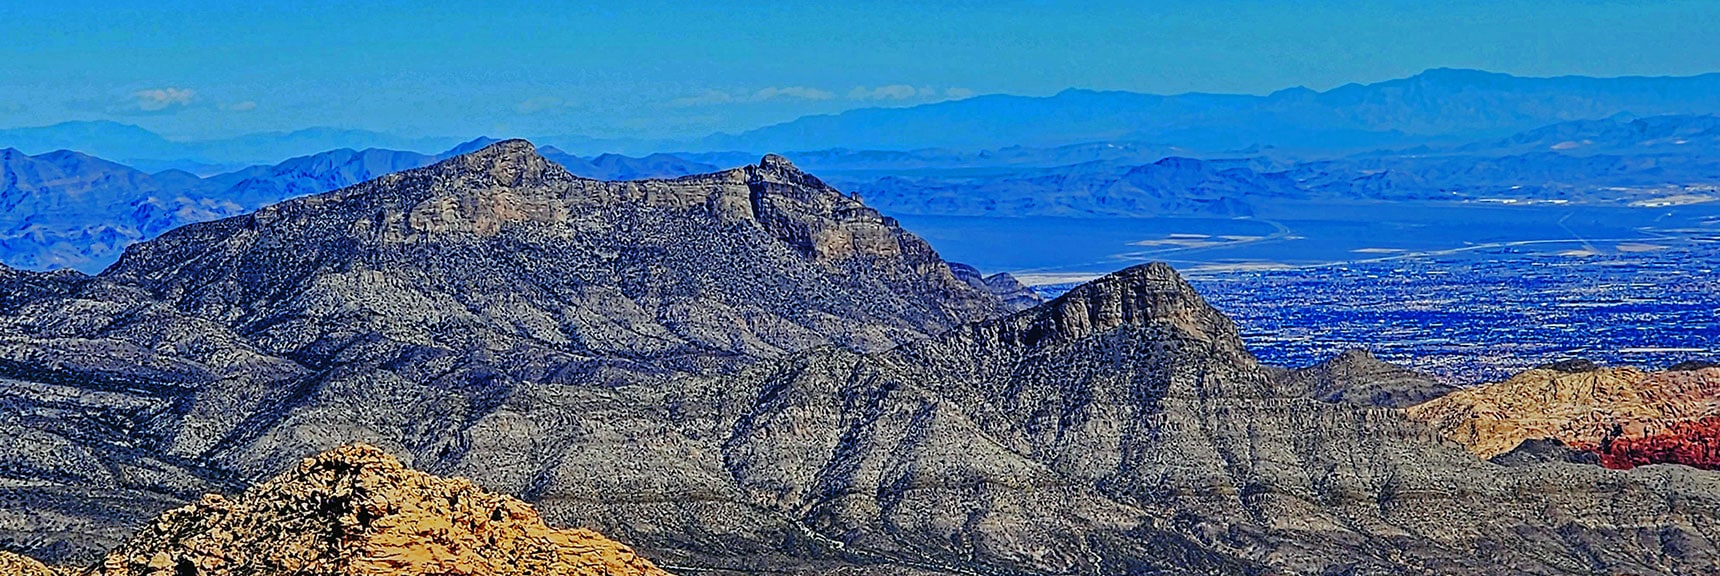 Damsel Peak (left) Turtlehead Peak (right) Las Vegas Valley Beyond. | Mini Matterhorn Pinnacle | Wilson Ridge | Lovell Canyon, Nevada